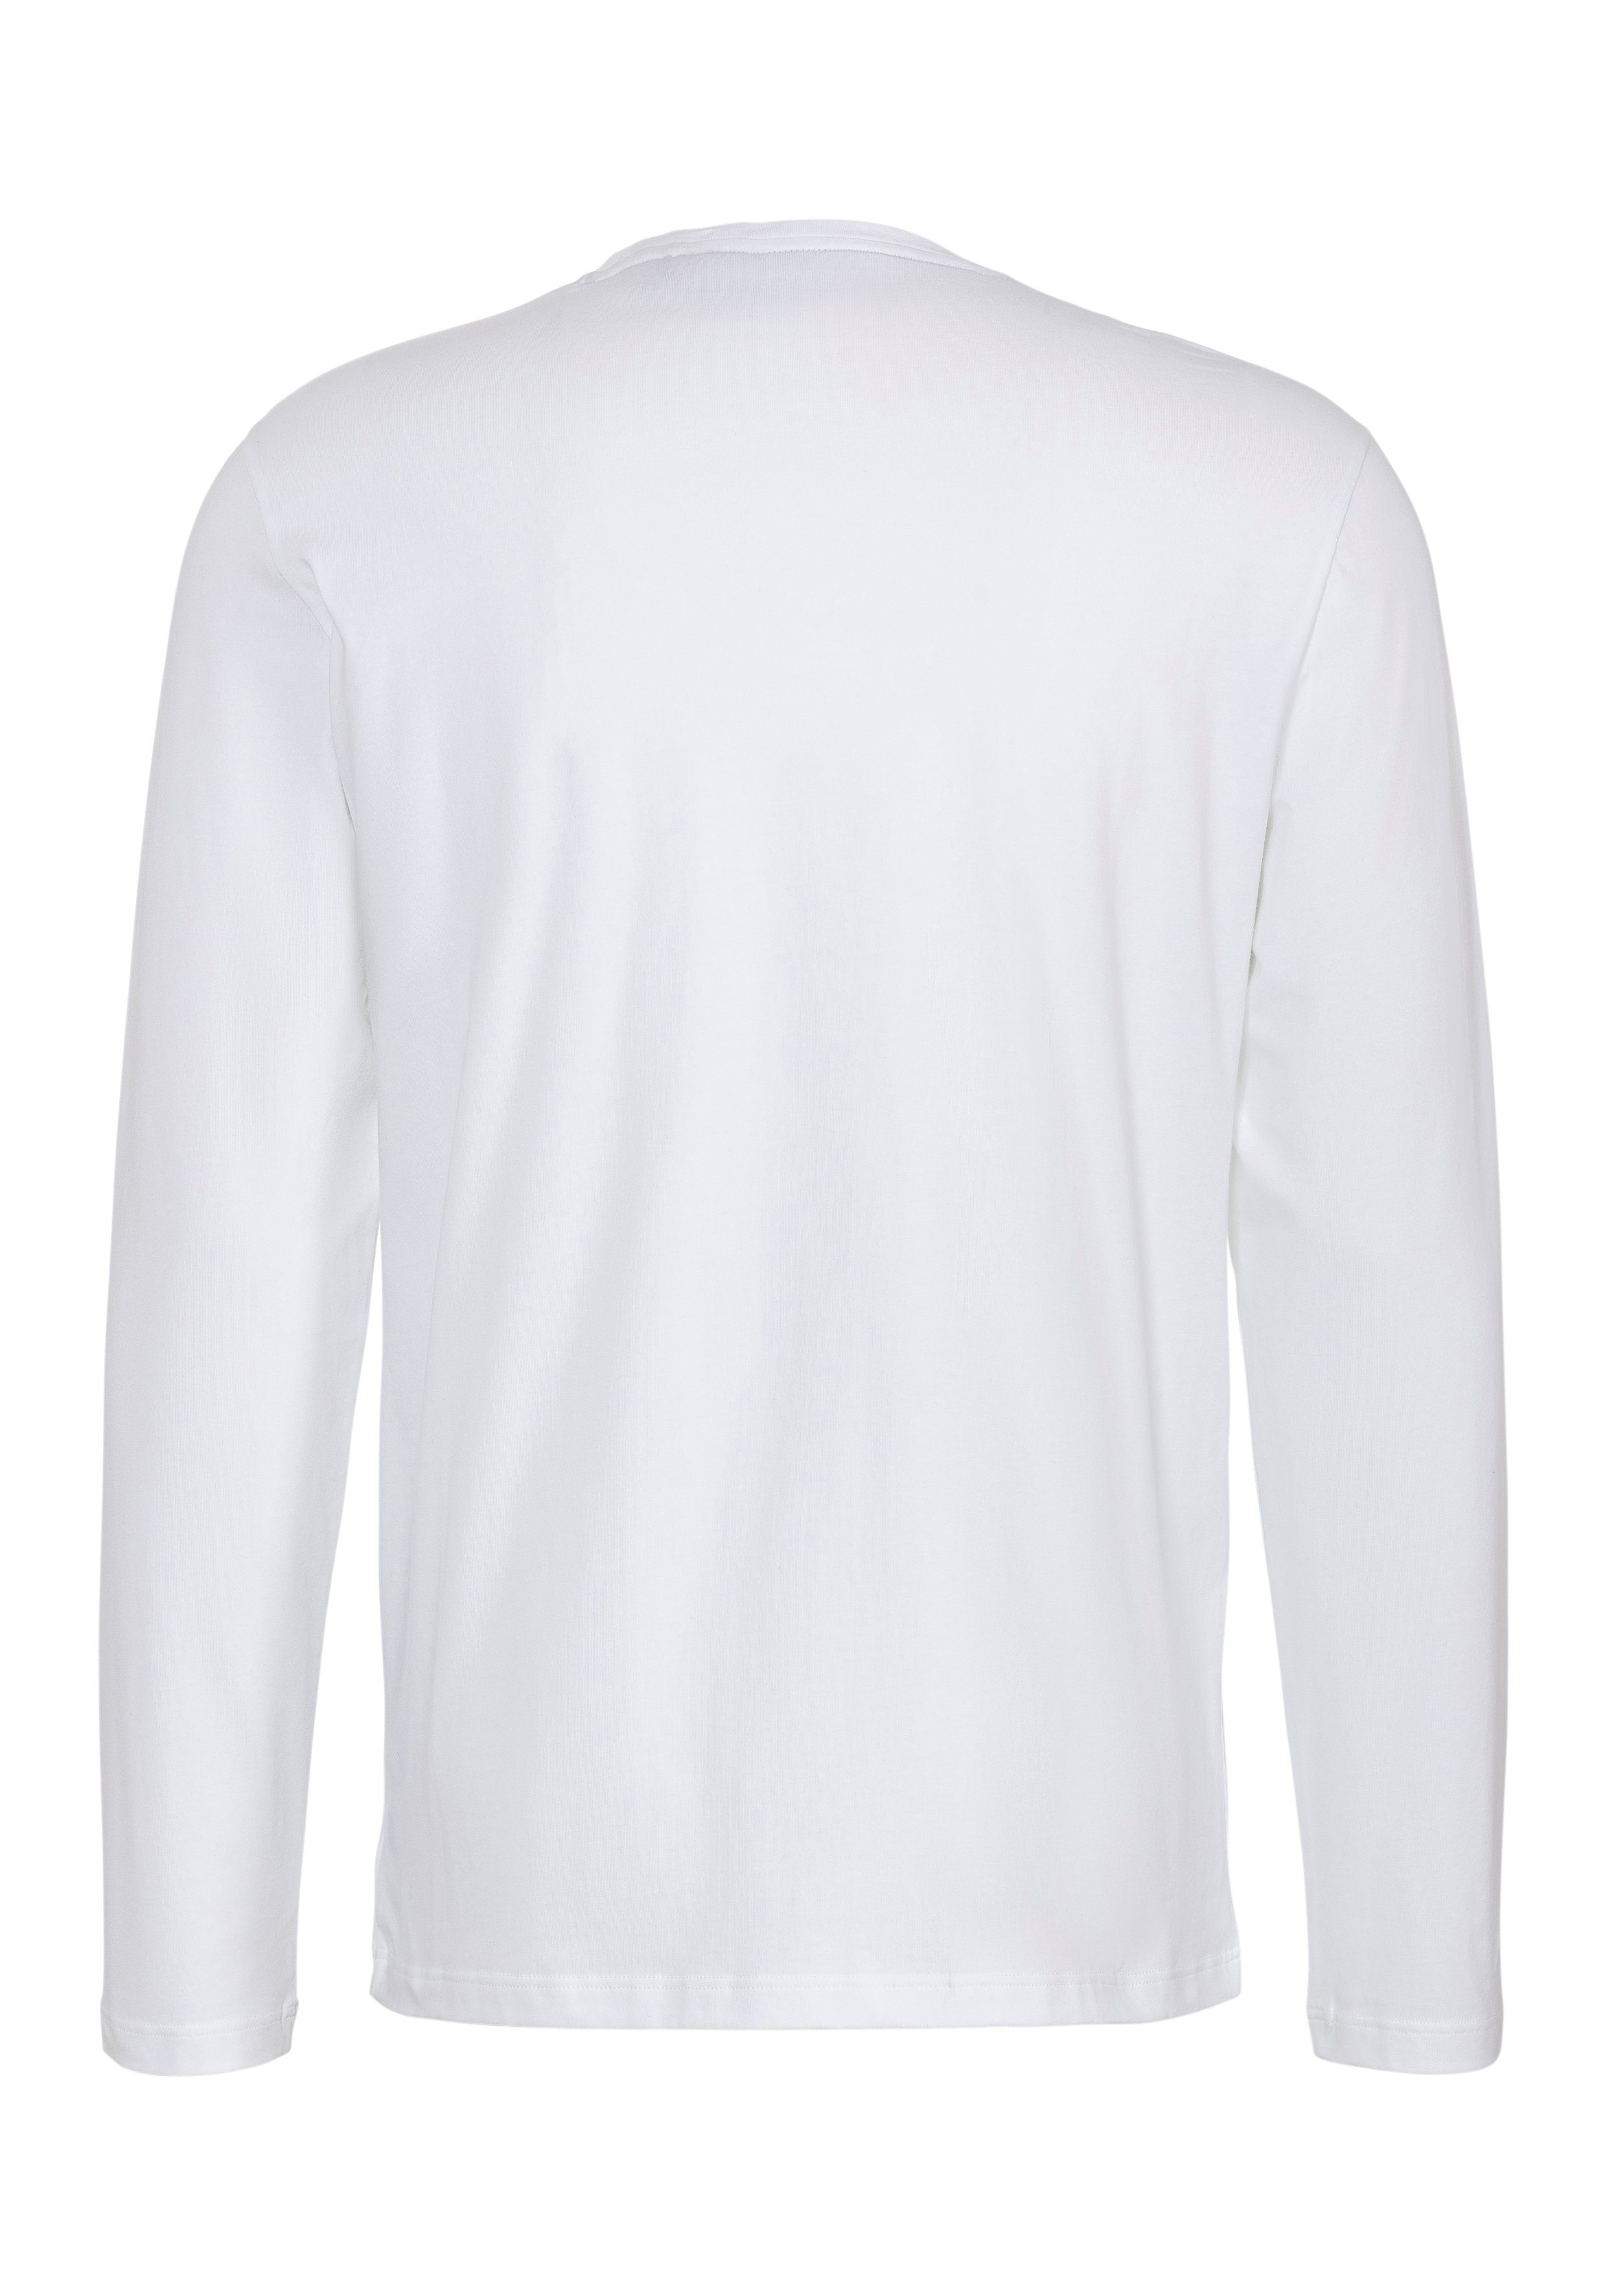 BOSS Langarmshirt LS-Shirt R White Stickerei Brust auf 100 BOSS mit der Mix&Match